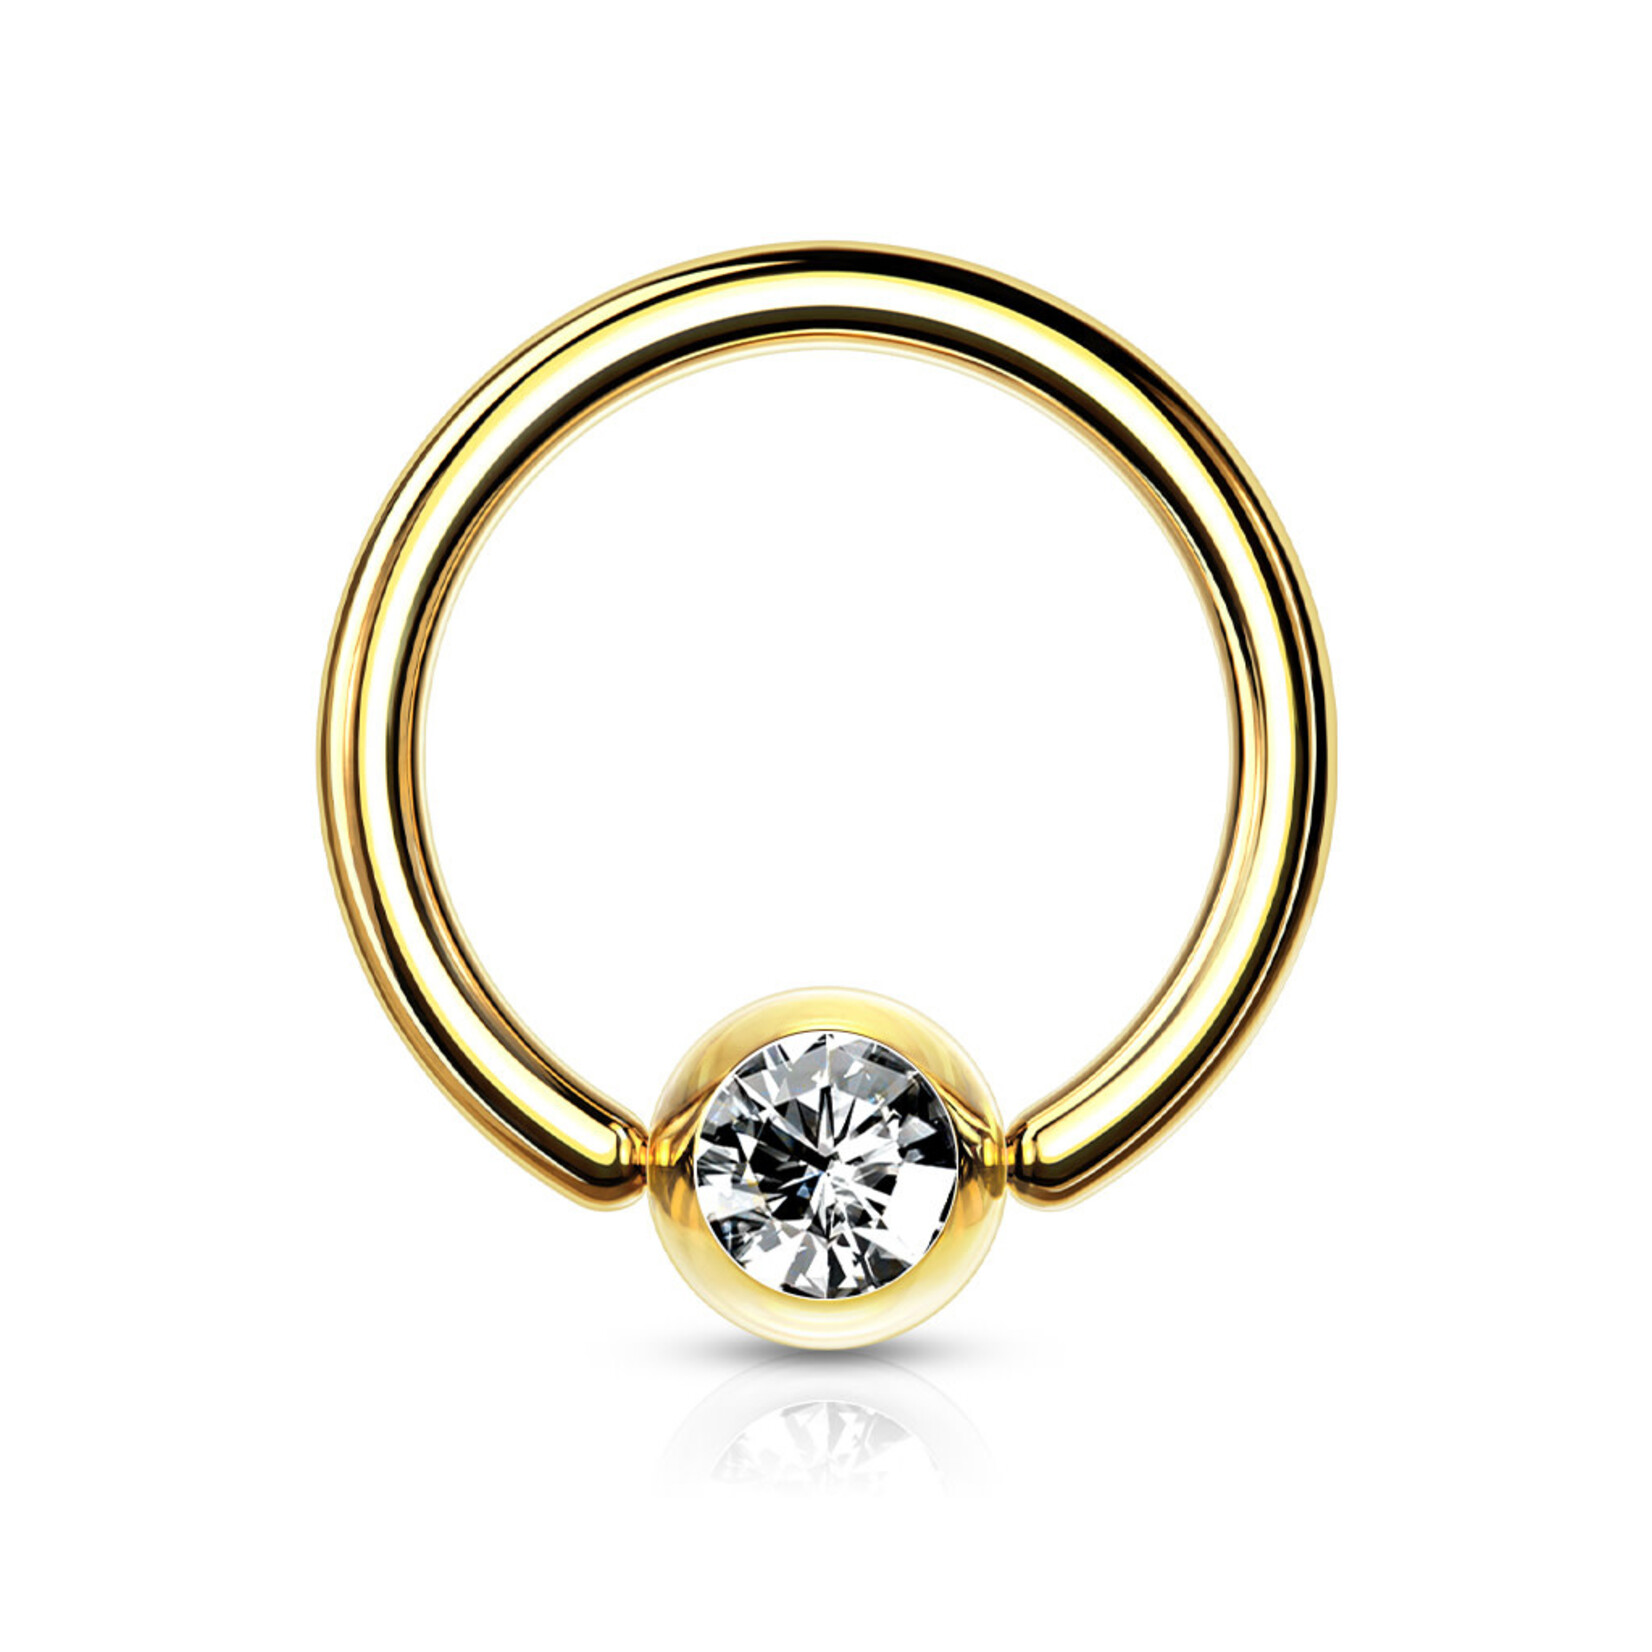 Hollywood Body Jewelry Gold Gem Captive Bead Ring